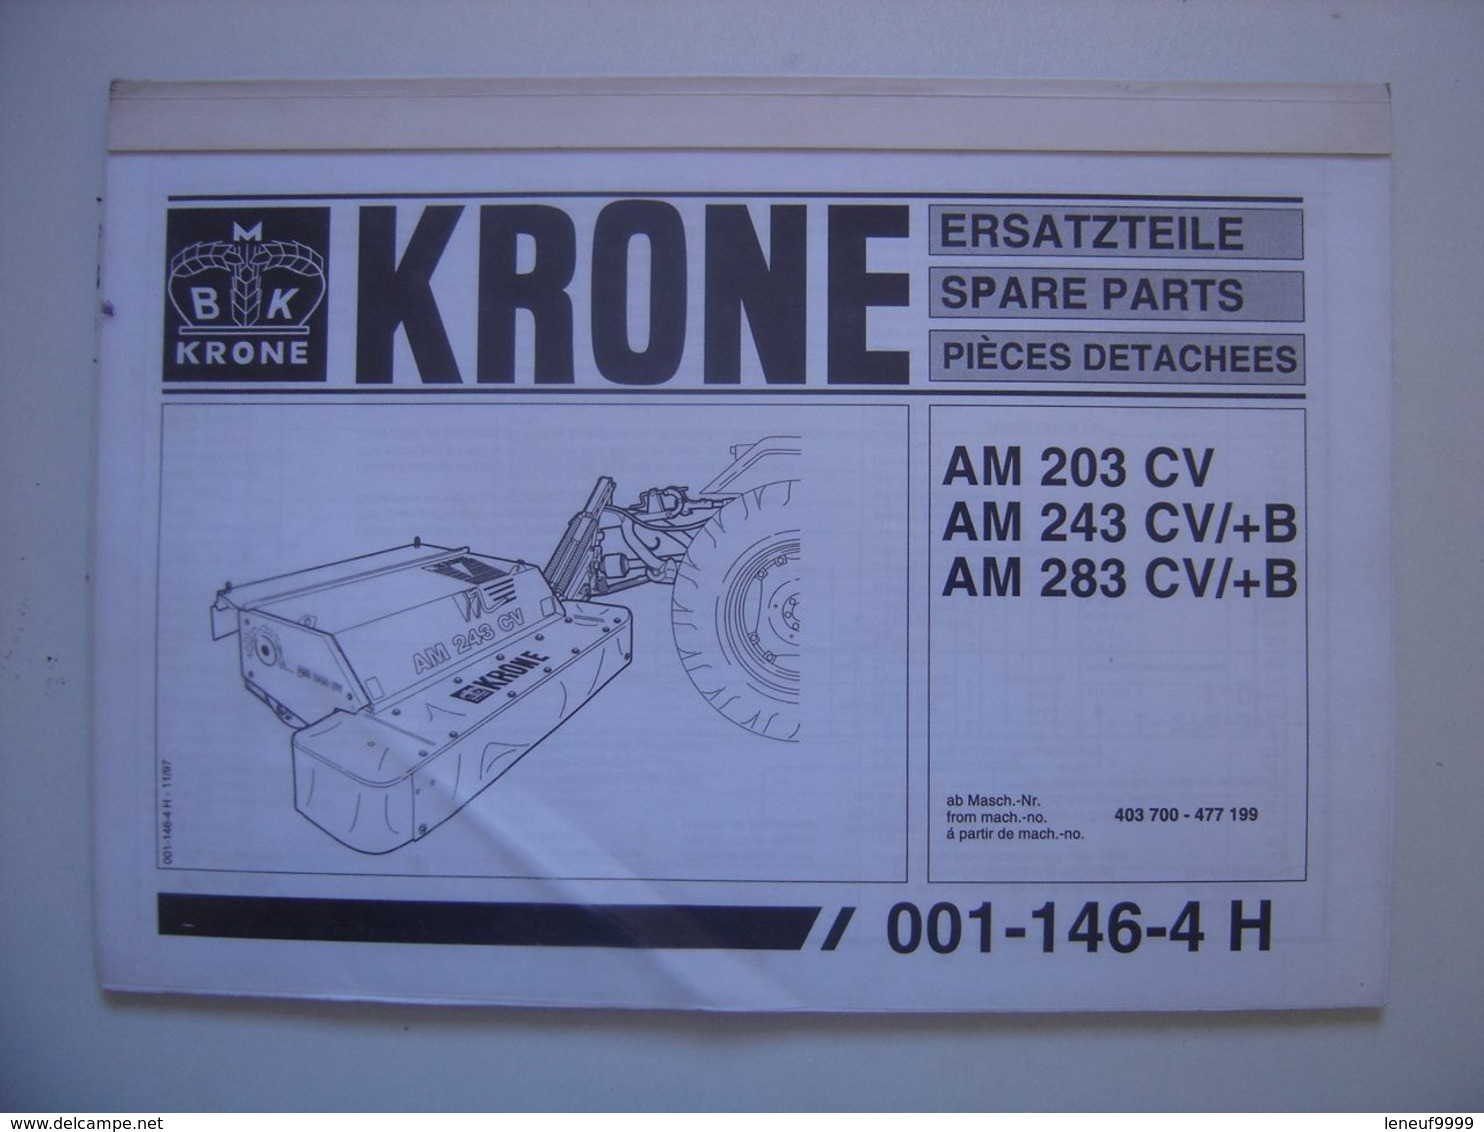 Manuel KRONE Materiel Agricole AM 243 CV Ersatzteile Spare Parts Pieces Detachee - Traktoren